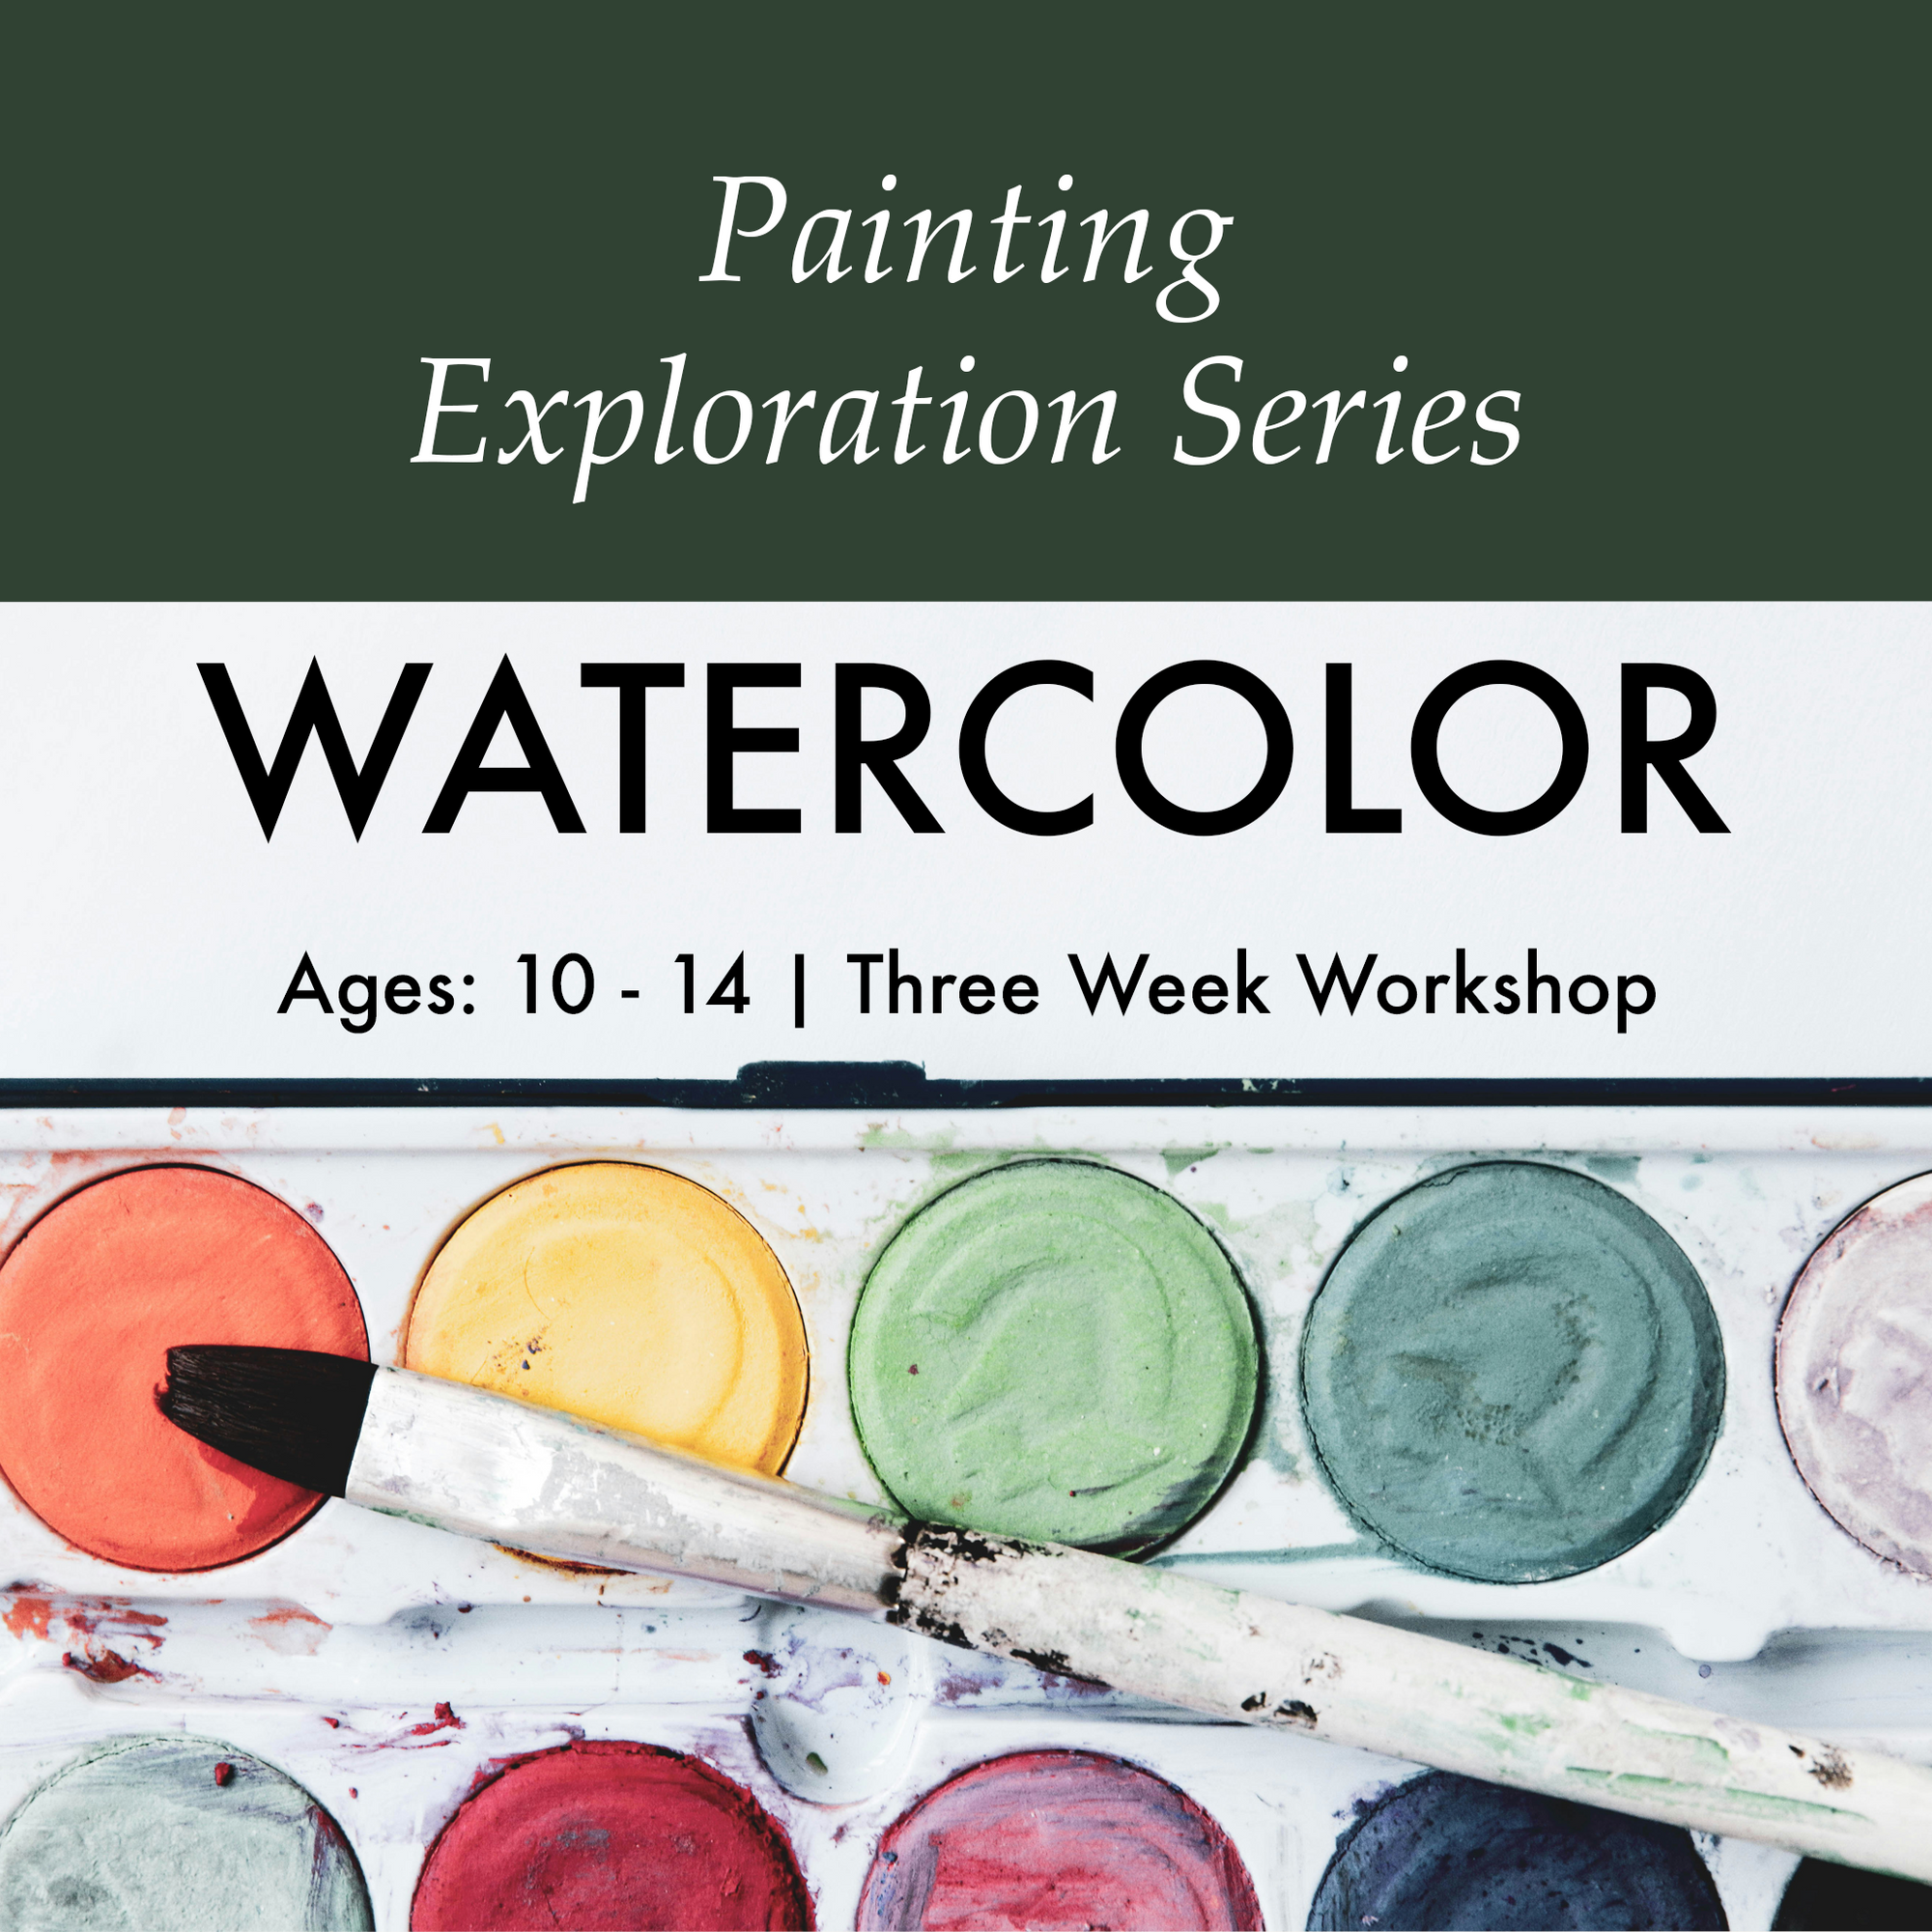 Painting Exploration Series: Watercolor | Mondays at 1 pm